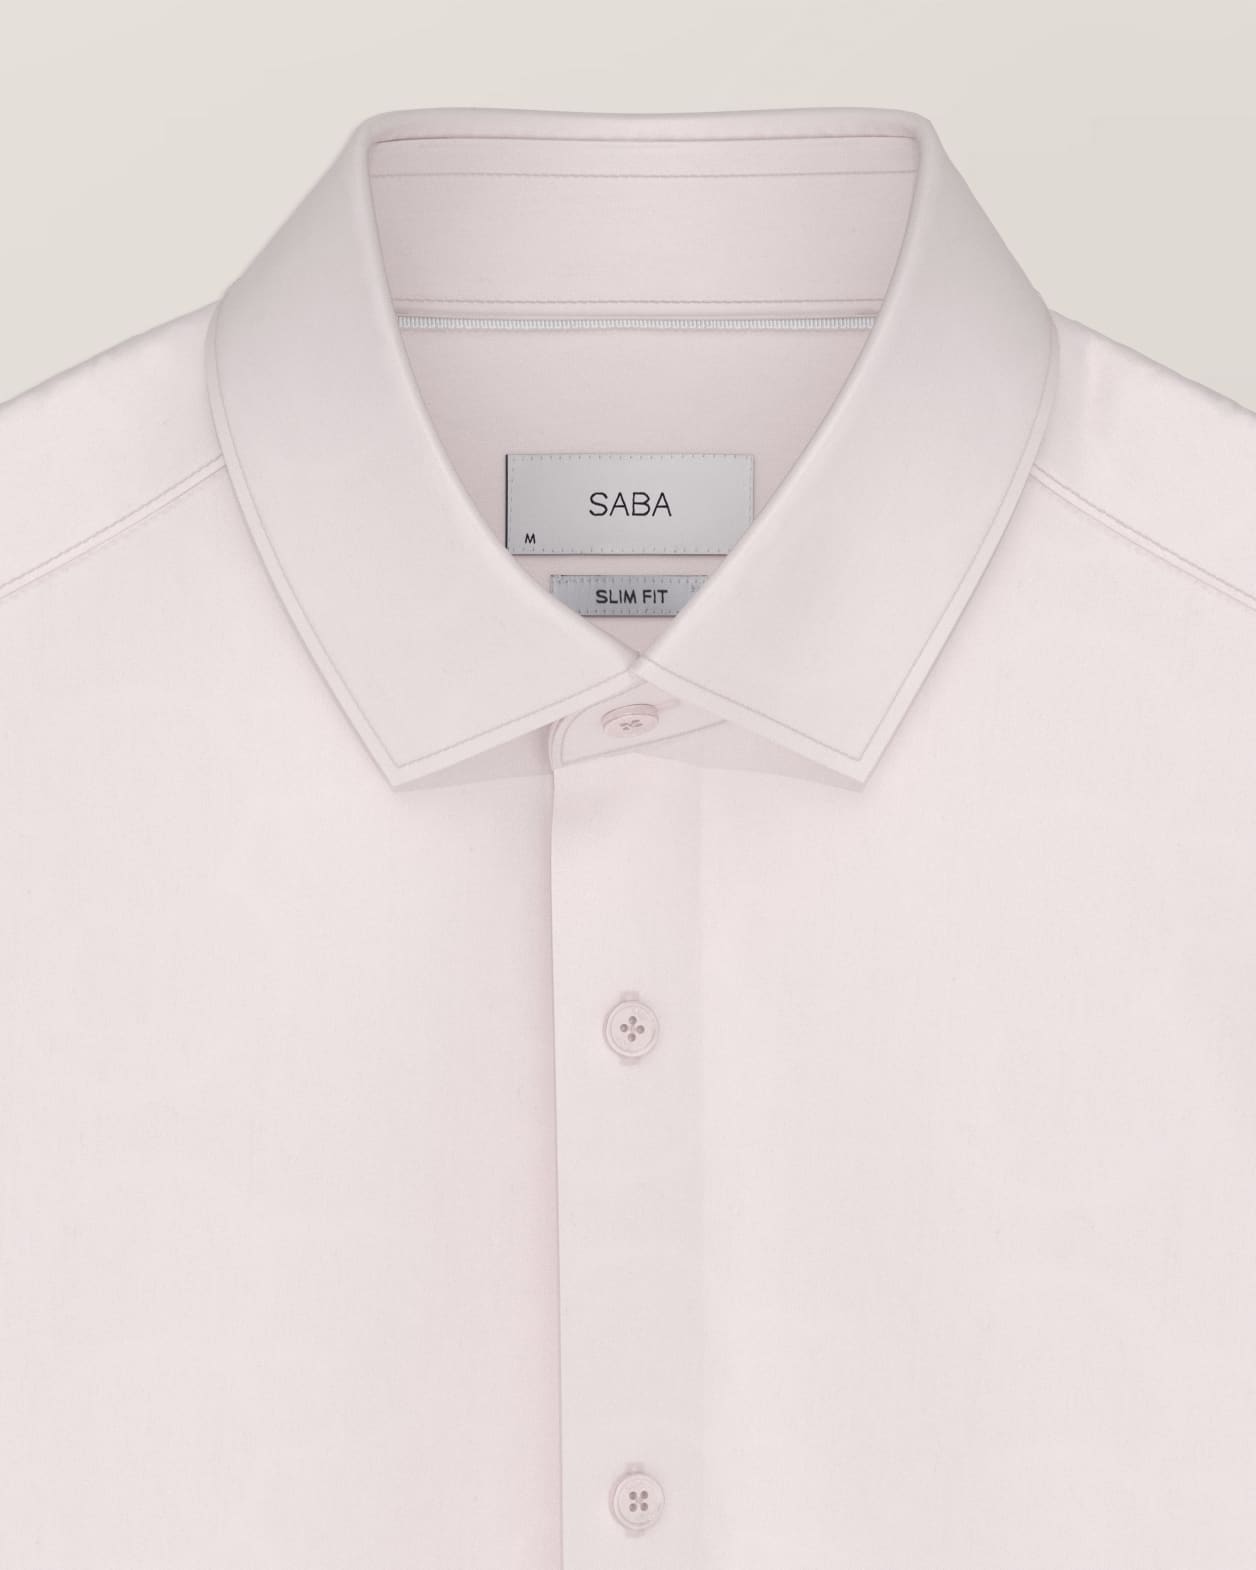 Leigh Long Sleeve Slim Sateen Shirt in PALE PINK